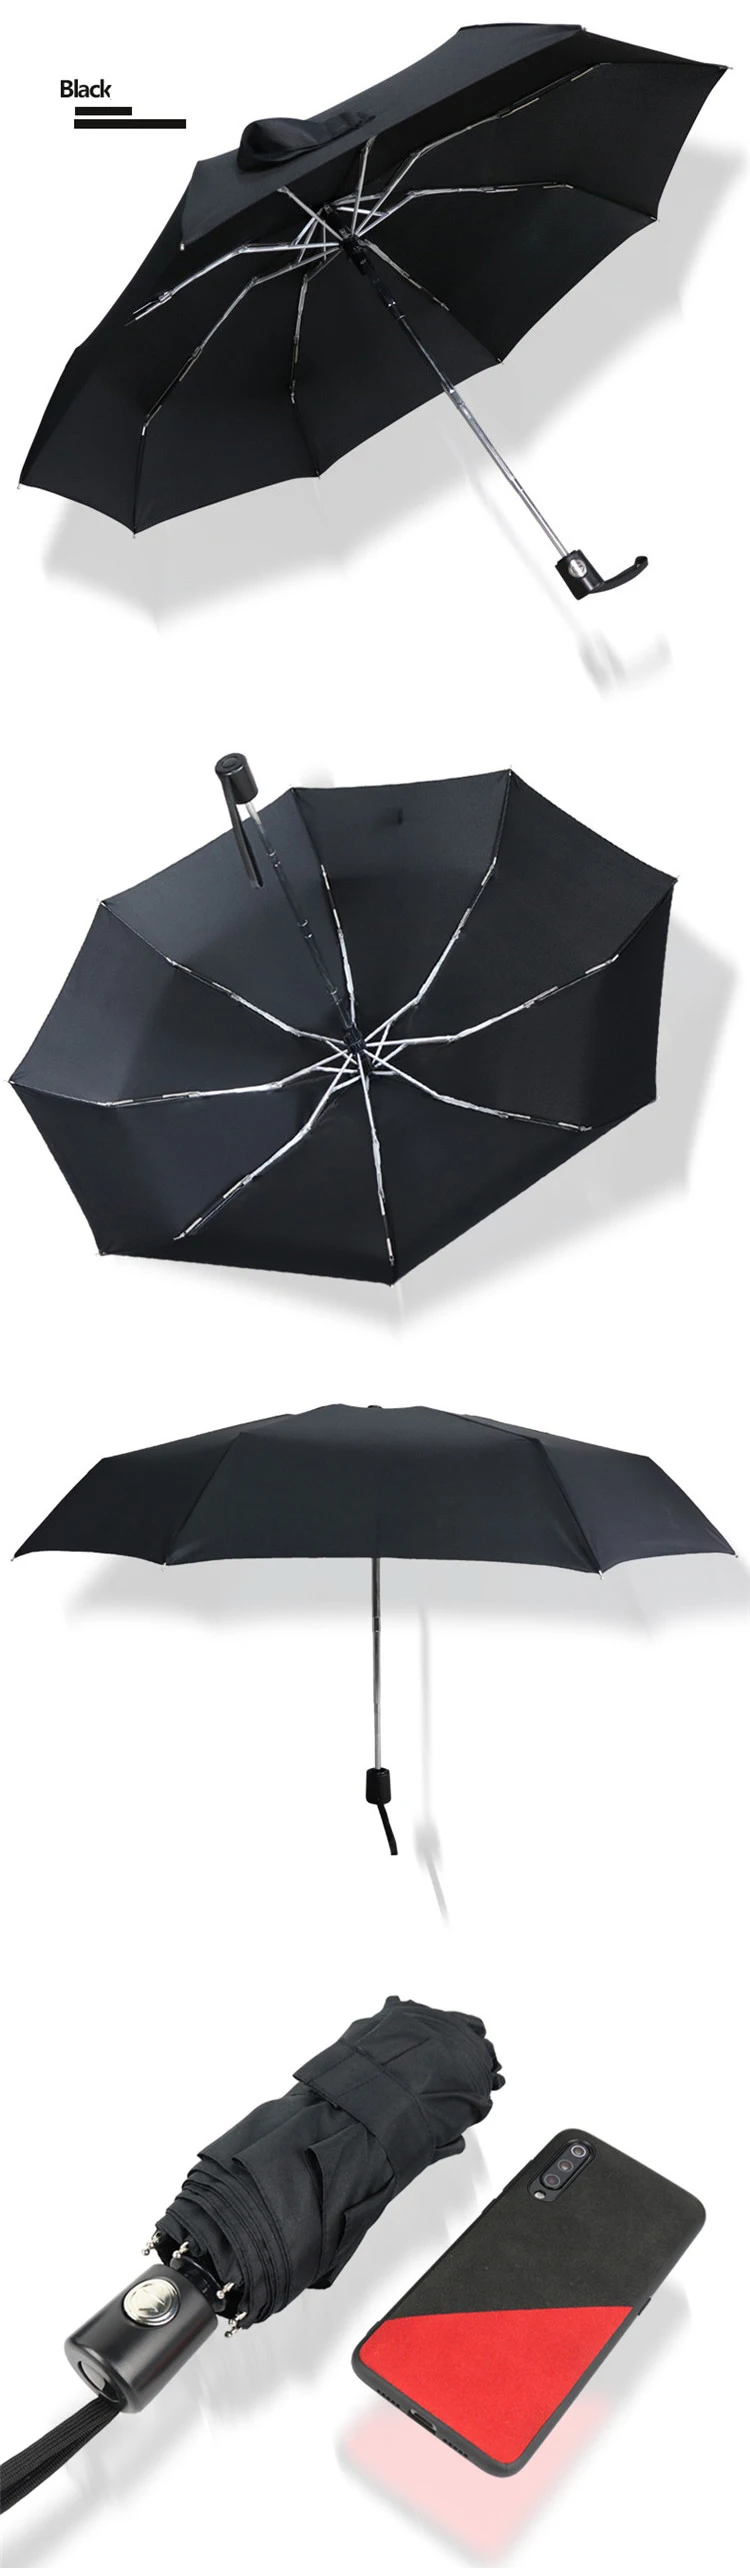 5 fold umbrella1.jpg